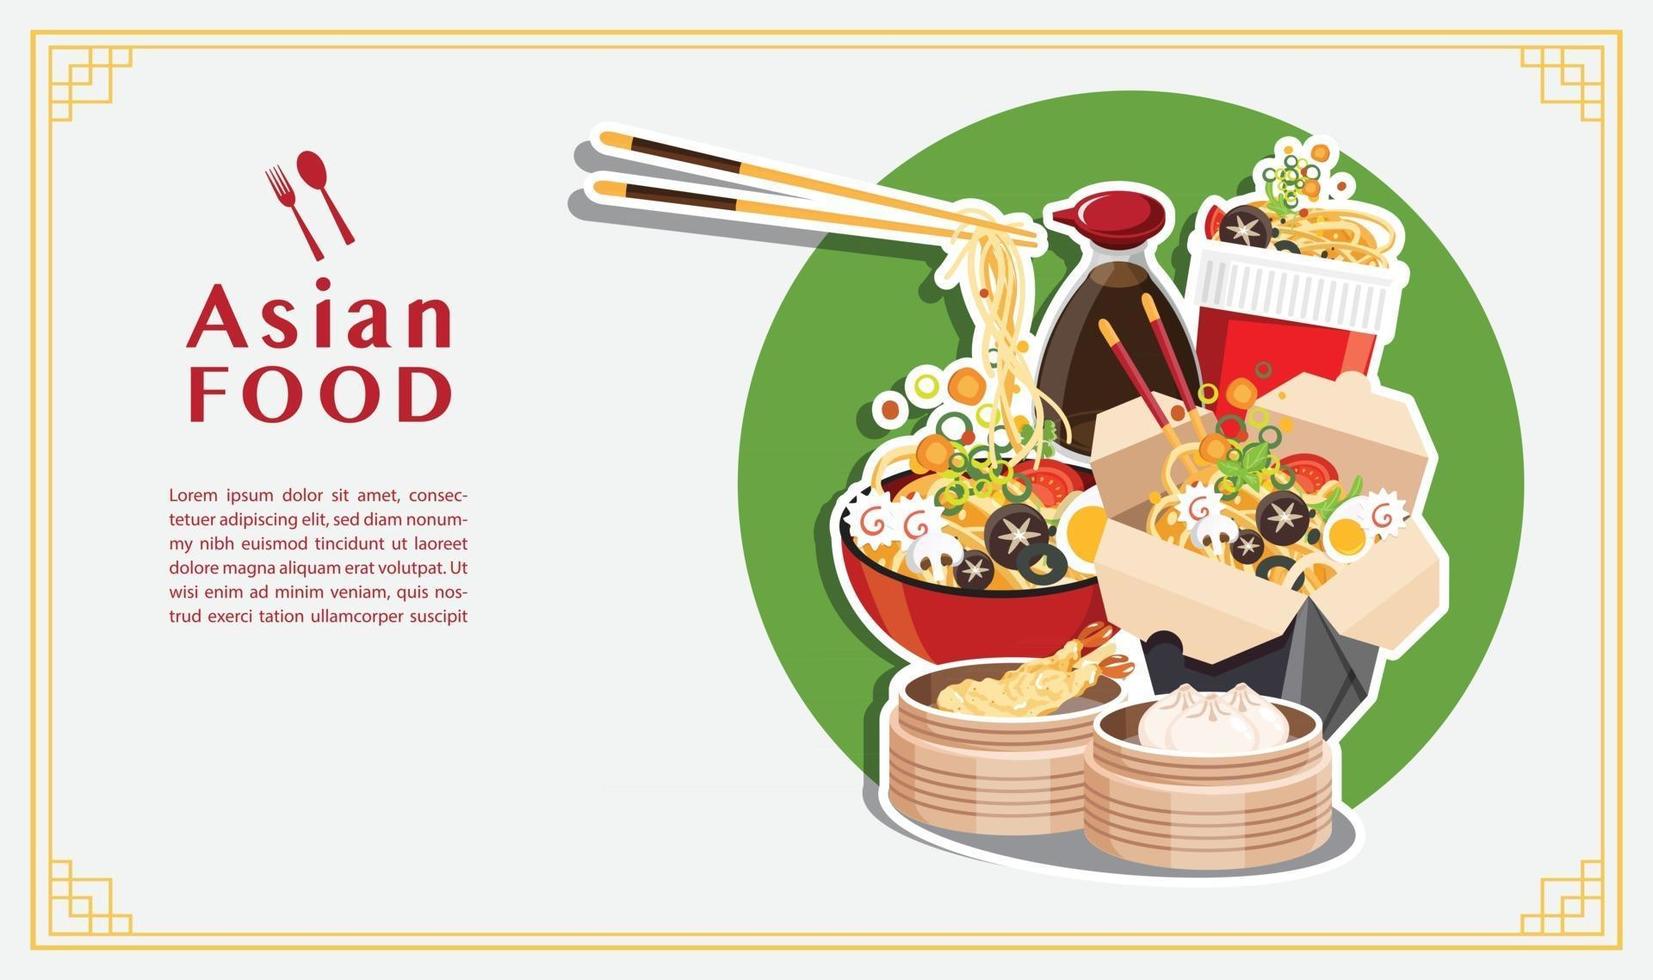 Noodle Soup, take away box, Japanese Ramen, Vector illustration